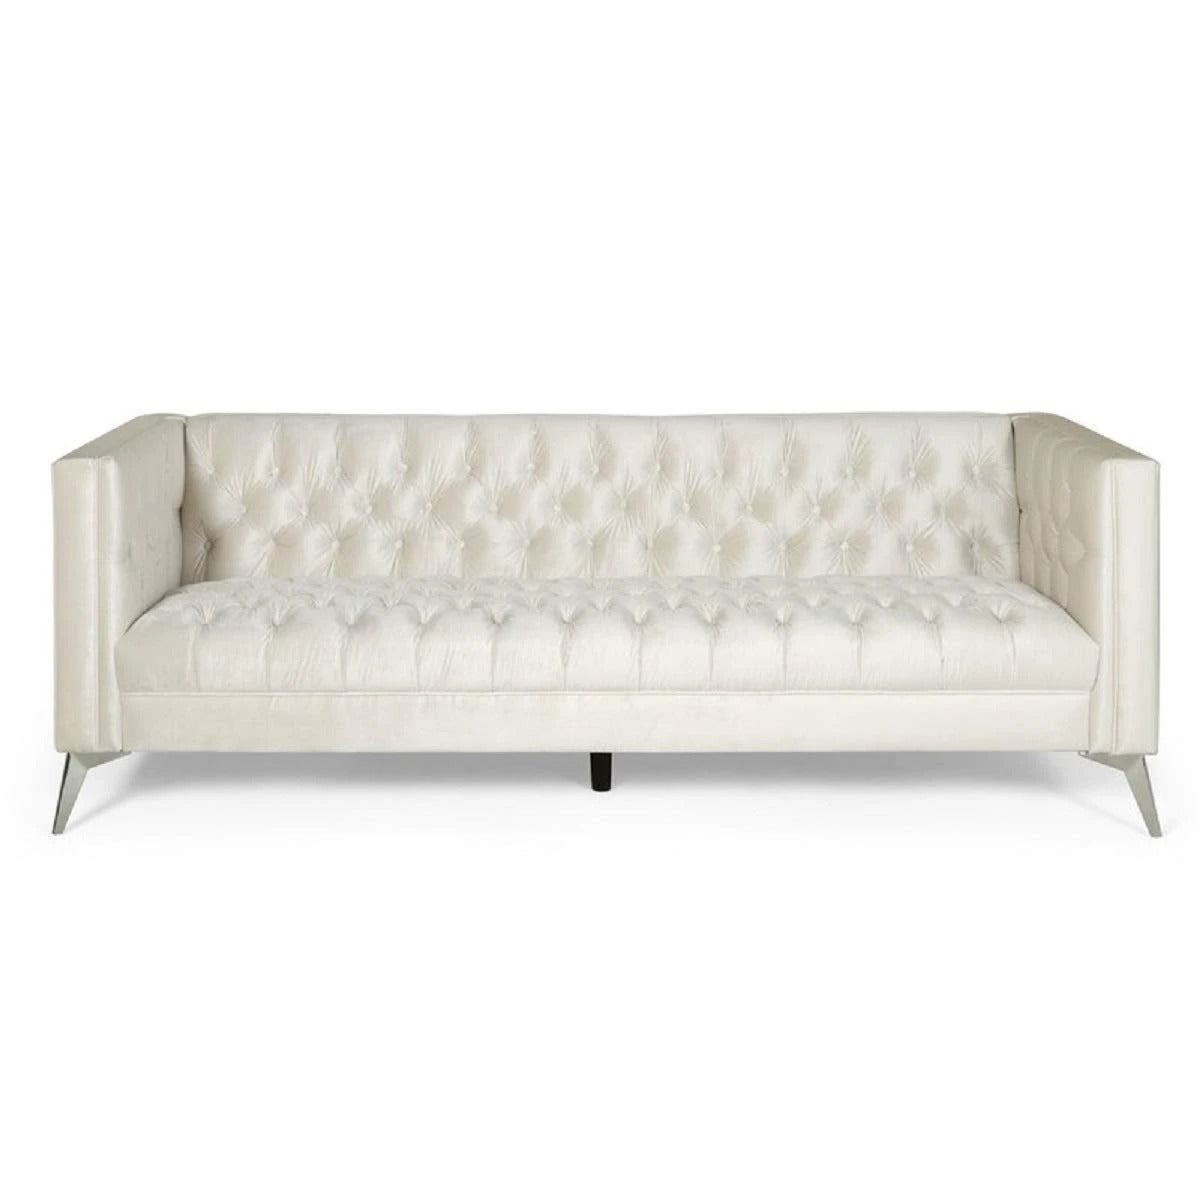 Designer Sofa Set:- Logue 3 Seater Velvet Fabric Luxury Furniture Sofa Set